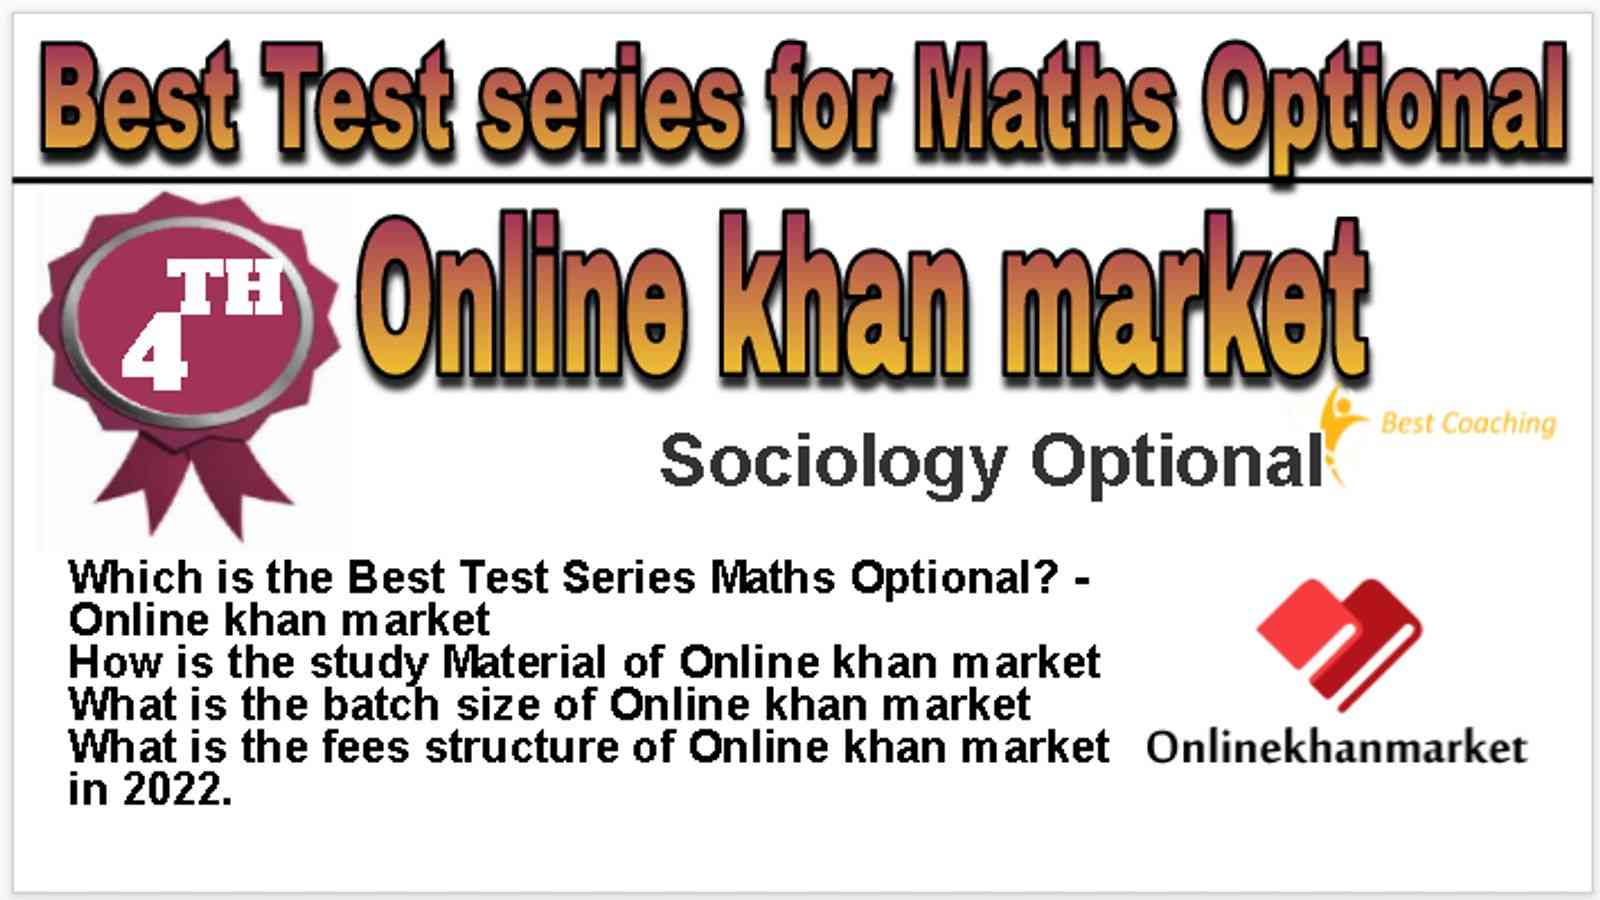 Rank 4 Best Test series for Maths Optional